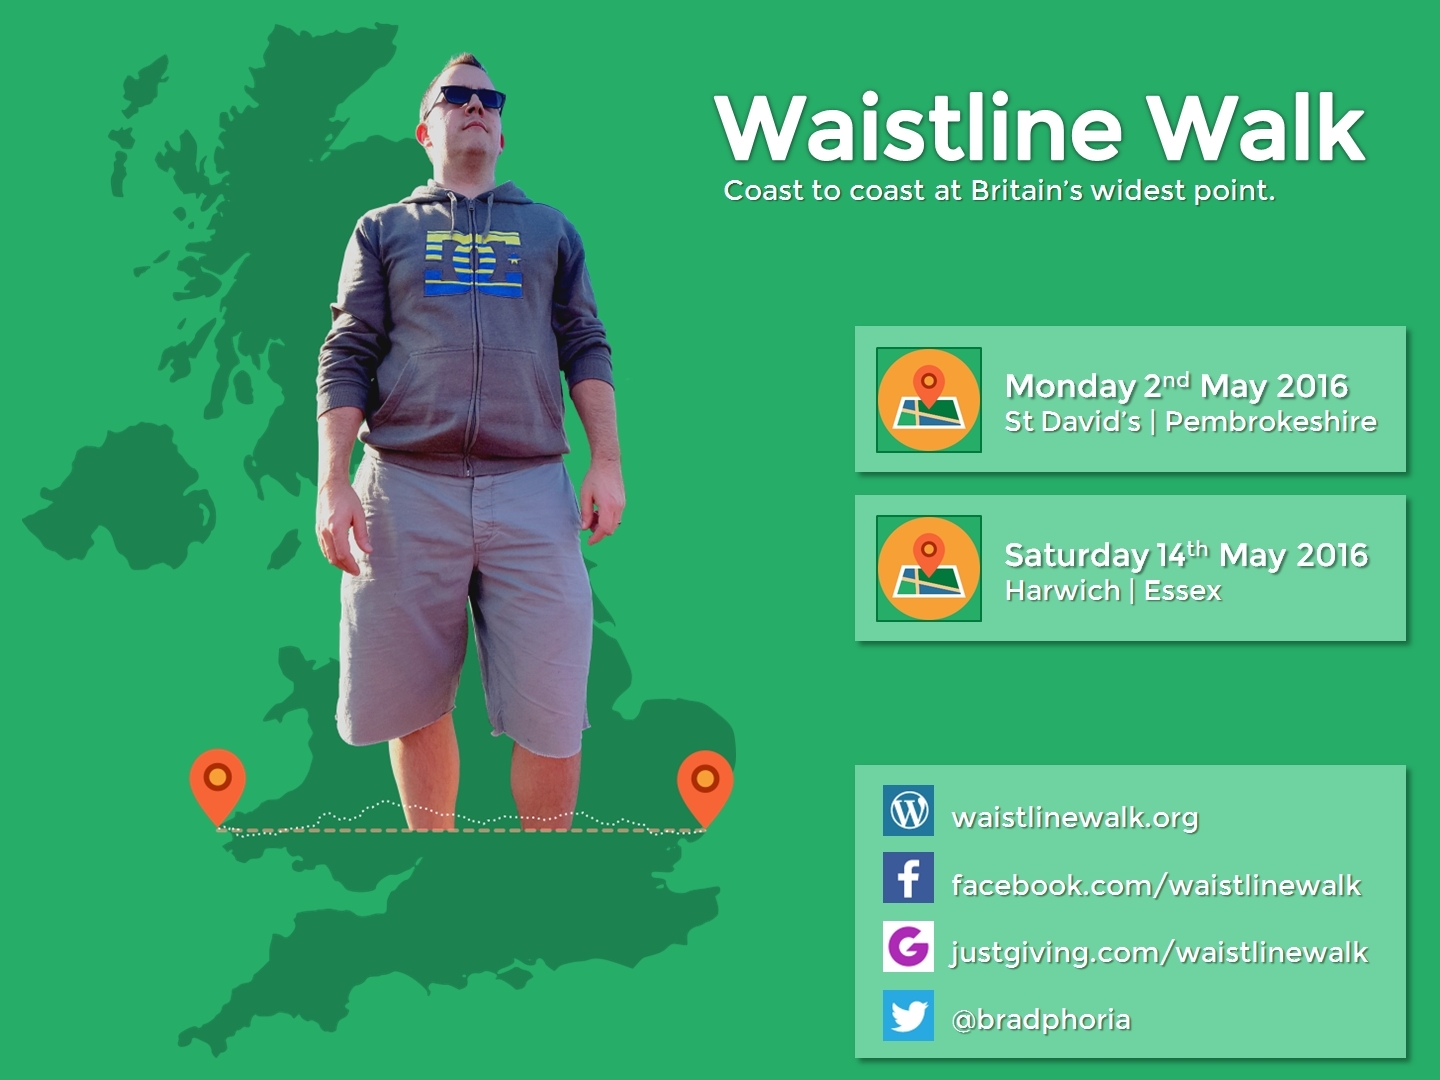 Waistline Walk - Follow the Adventure